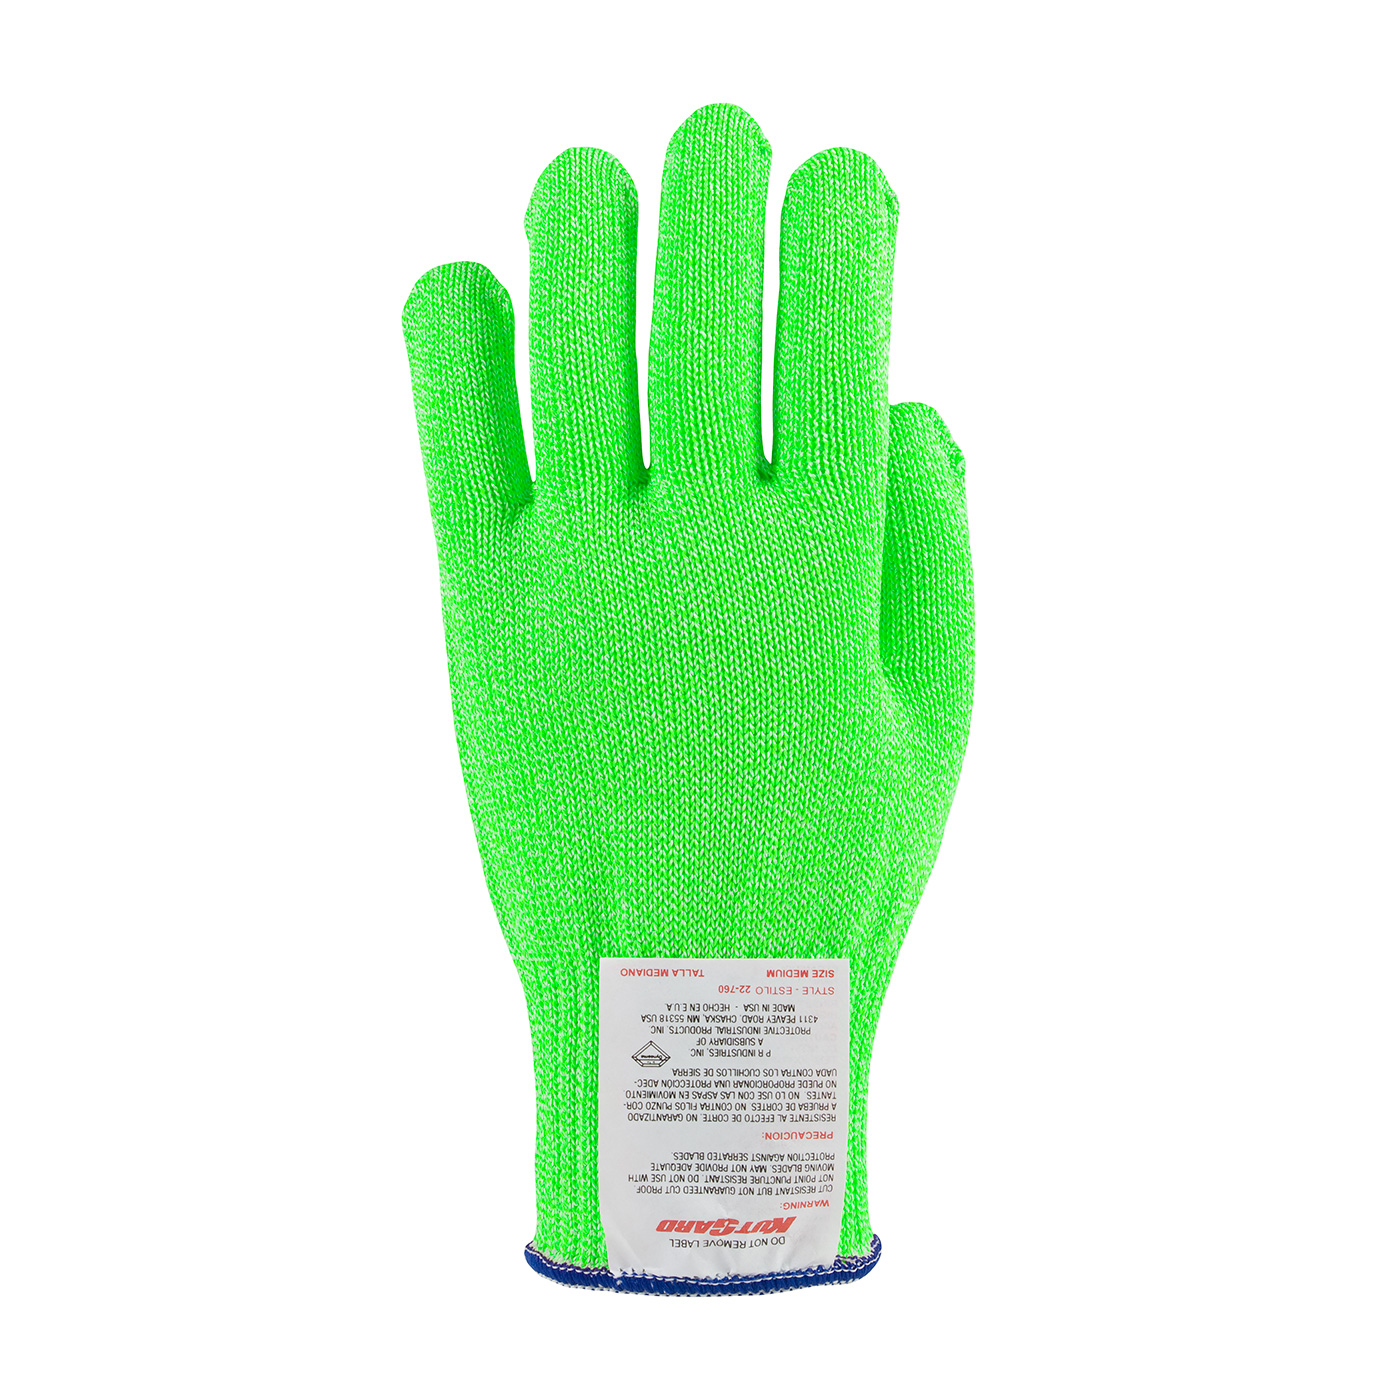 # 22 - 760 bg PIP®未来ght Green Kut-Gard® Dyneema® Blended Cut Level A7 Antimicrobial Glove - Medium Weight